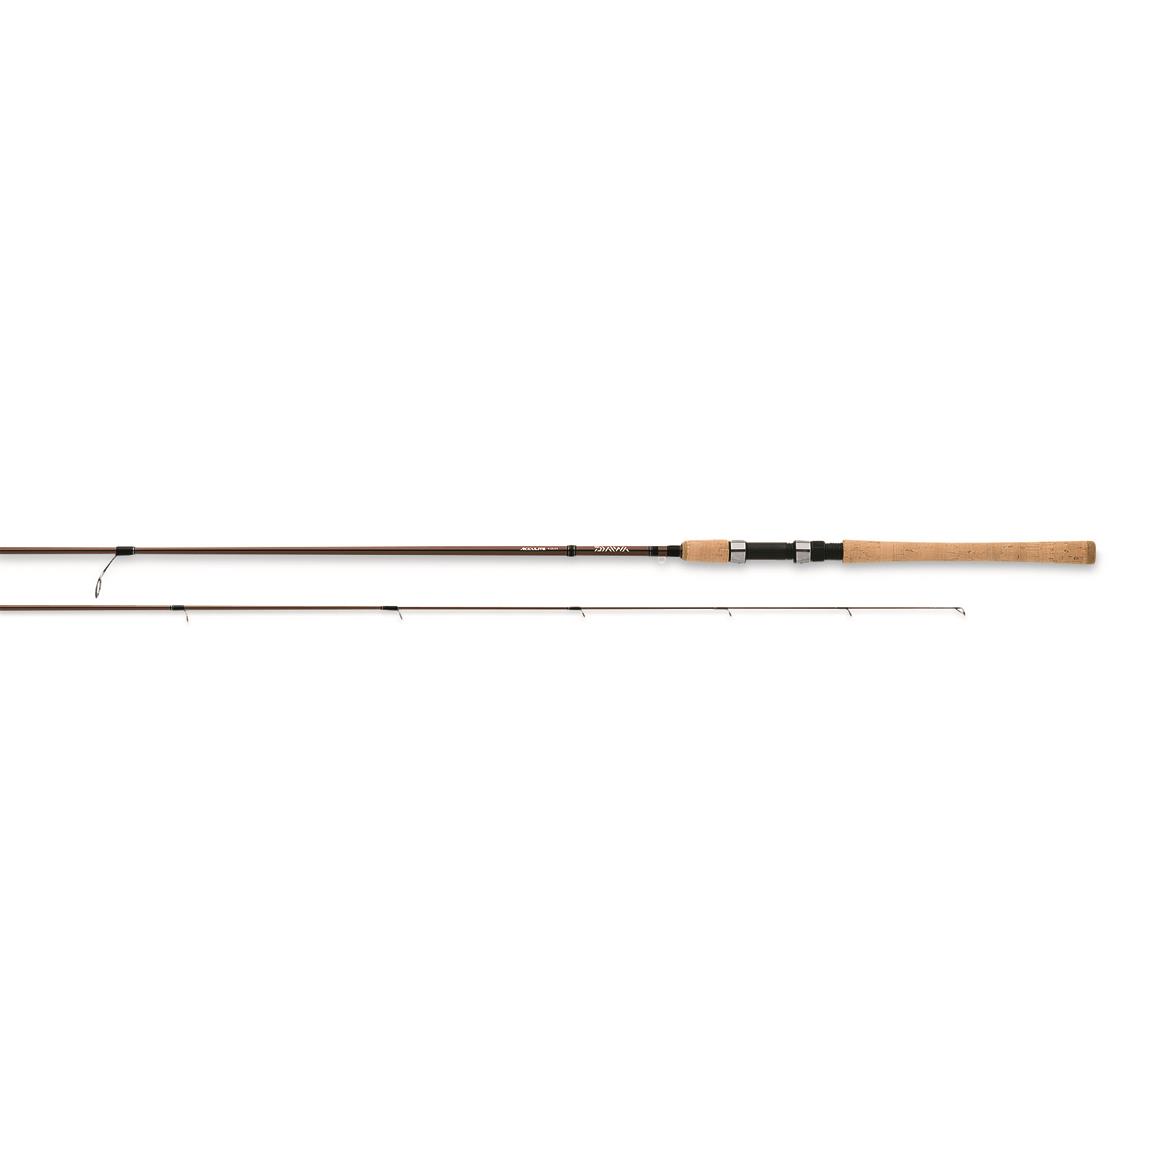 Daiwa Acculite Salmon/Trout/Steelhead Spinning Rod, 9' Length, Medium Light Power, Fast Action